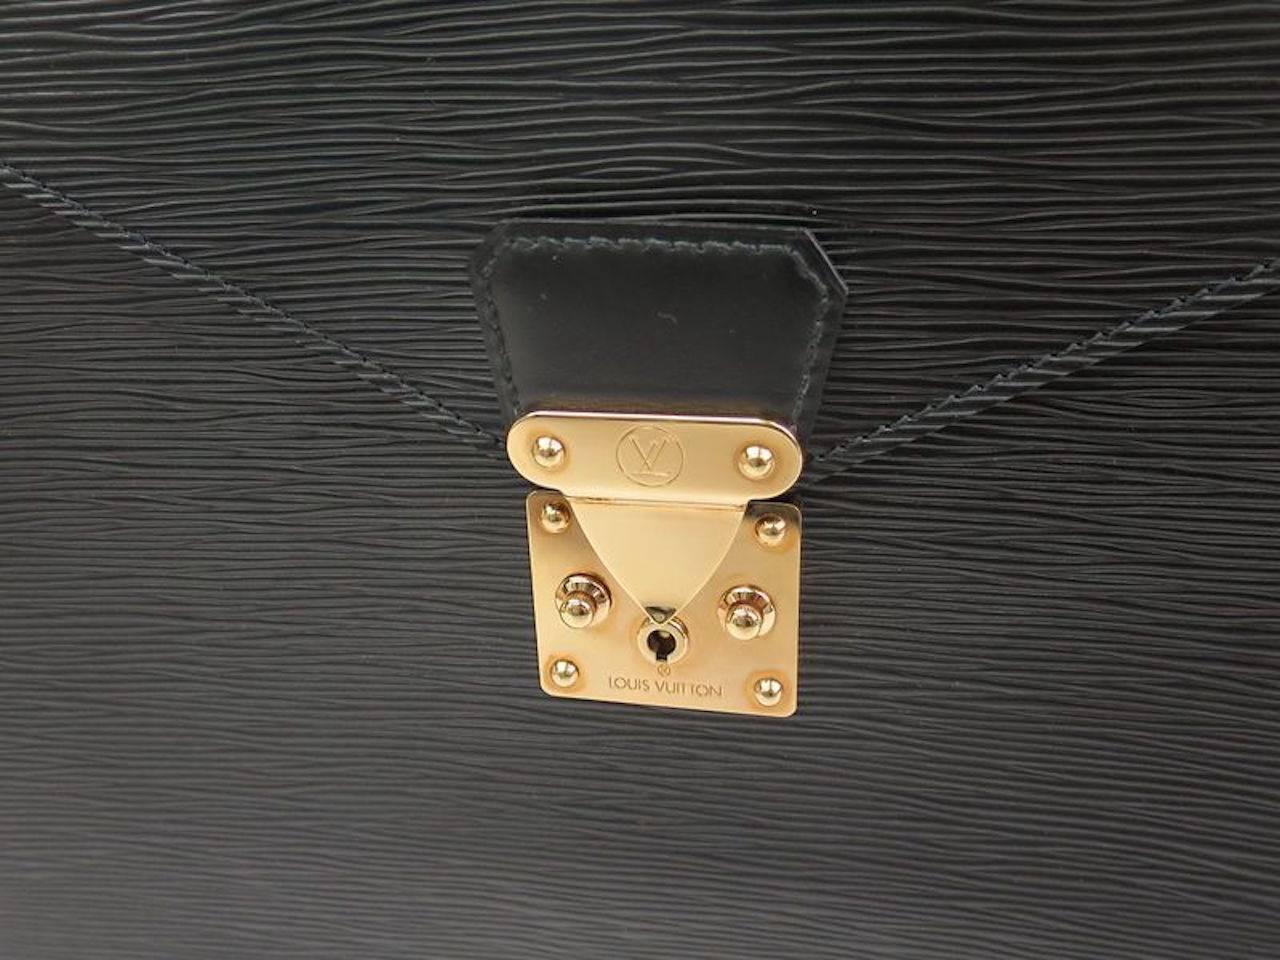 CURATOR'S NOTES

Epi leather
Gold hardware
Slide lock closure
Made in France 
Measures 17.5